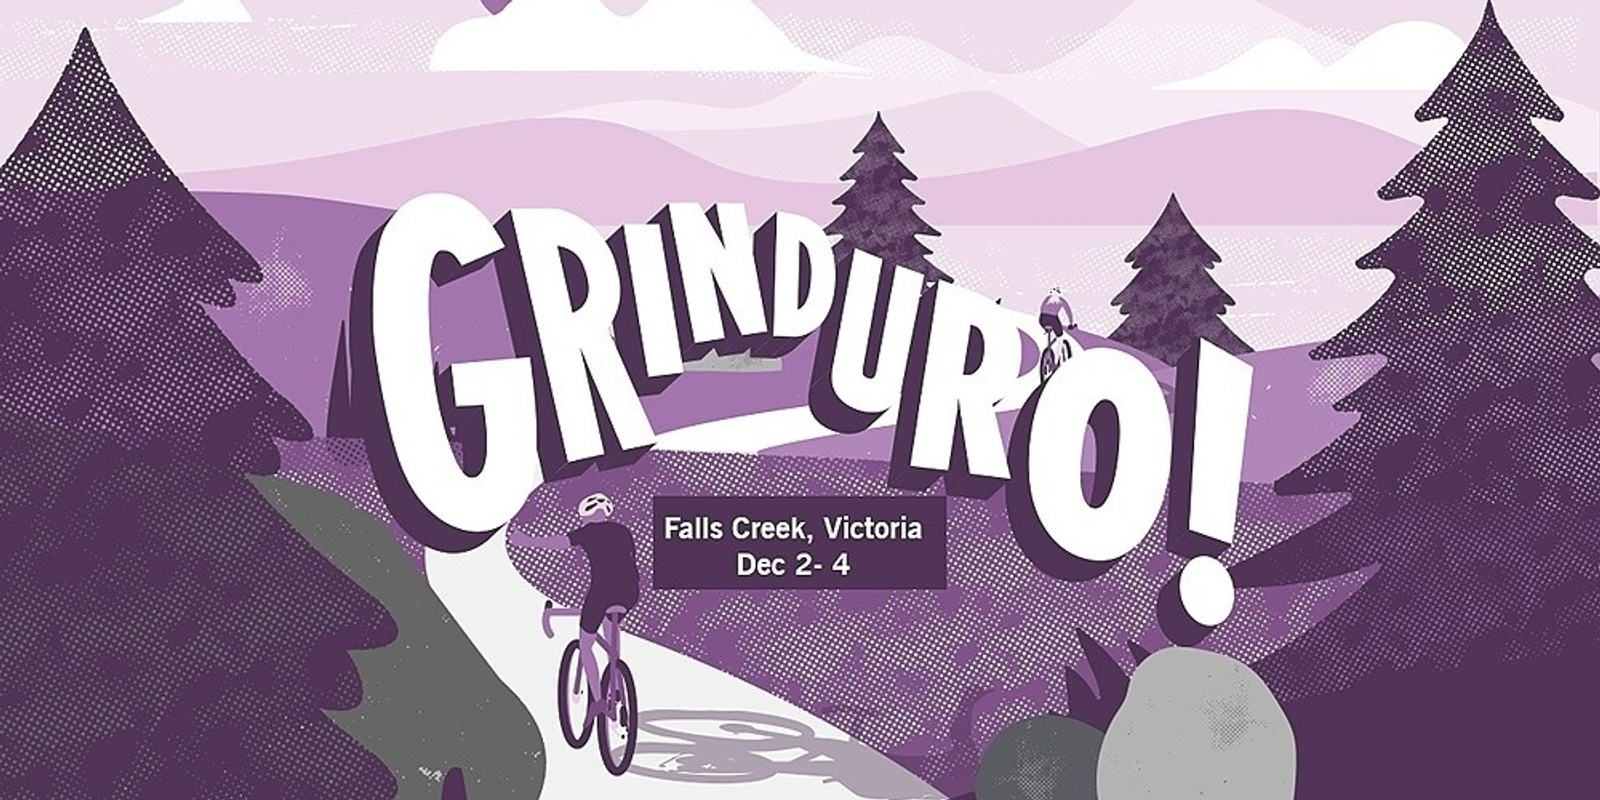 Banner image for Grinduro Australia